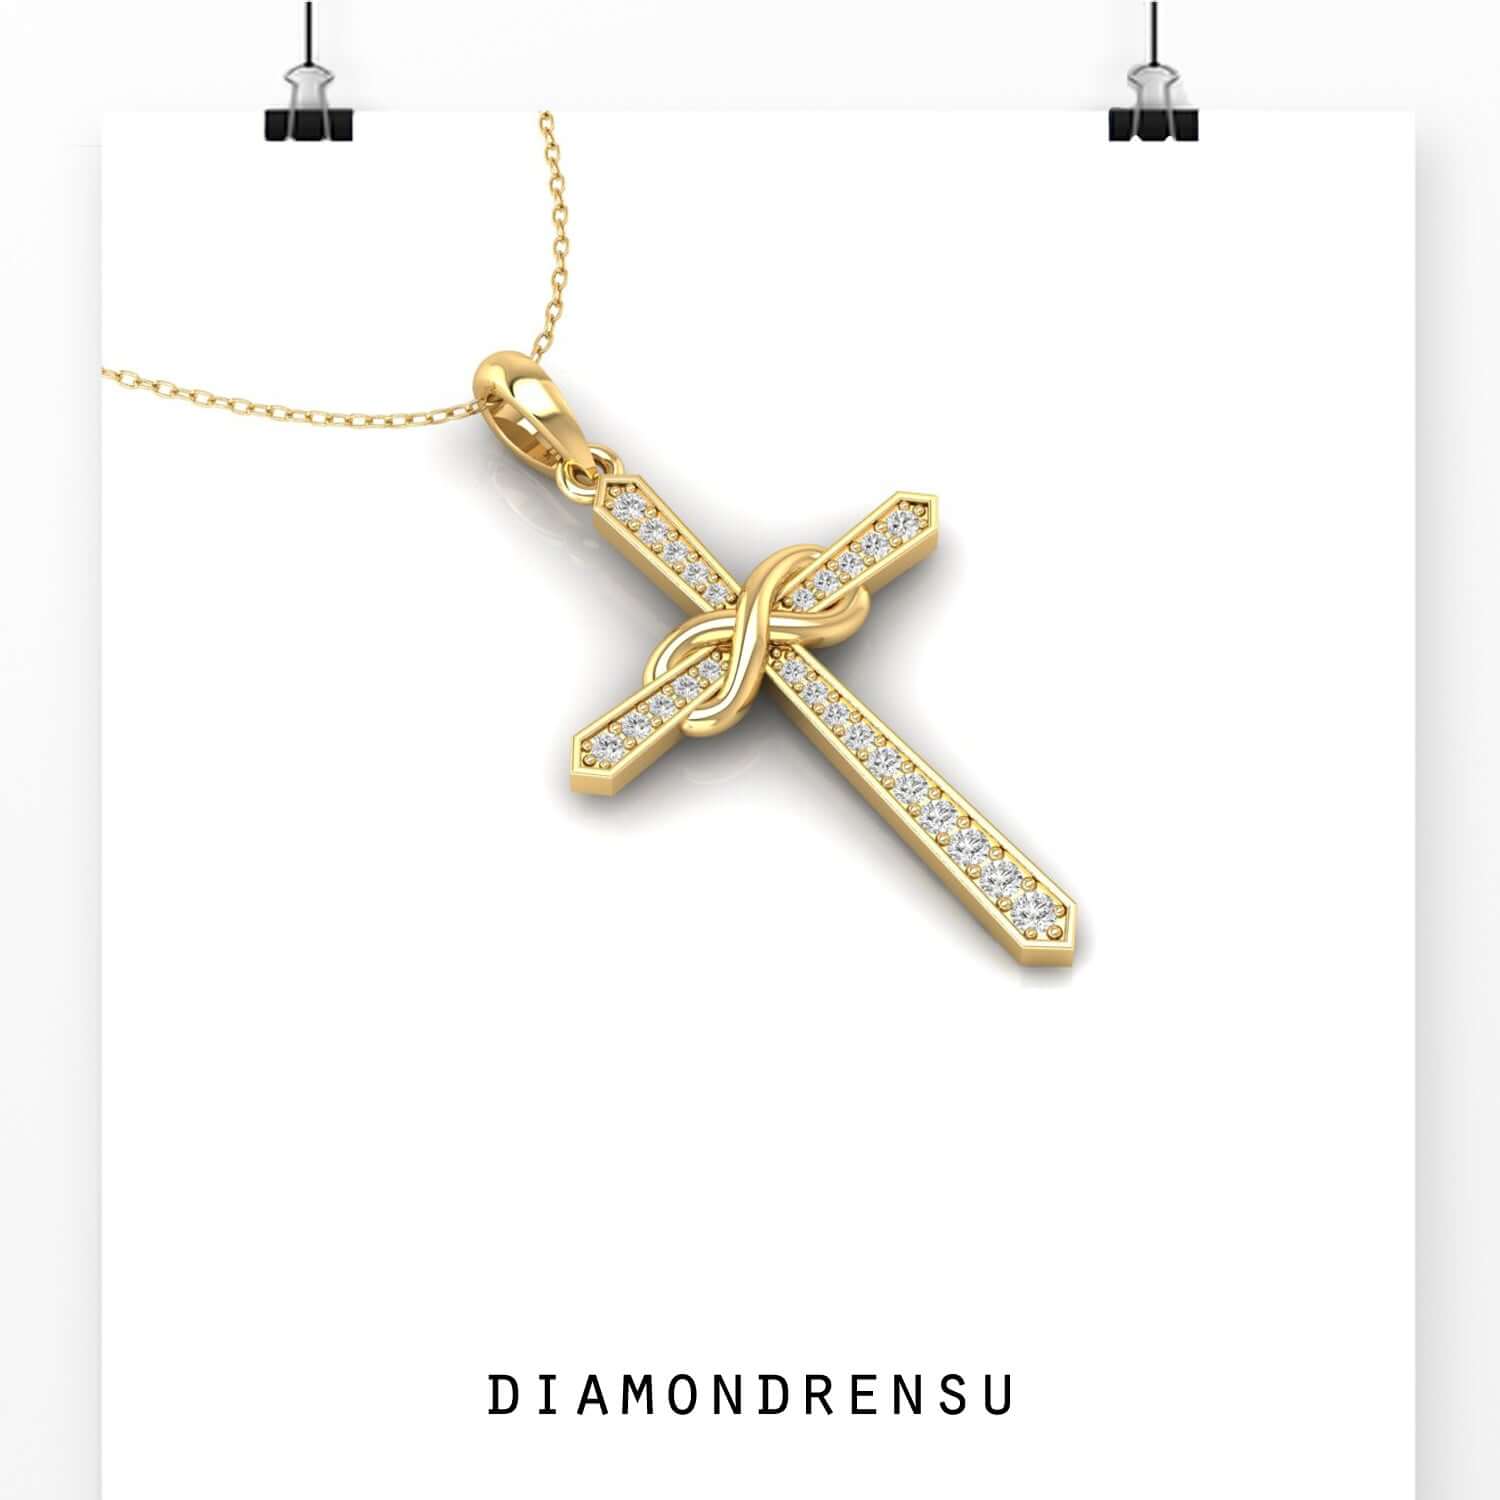 yellow gold pendant - diamondrensu